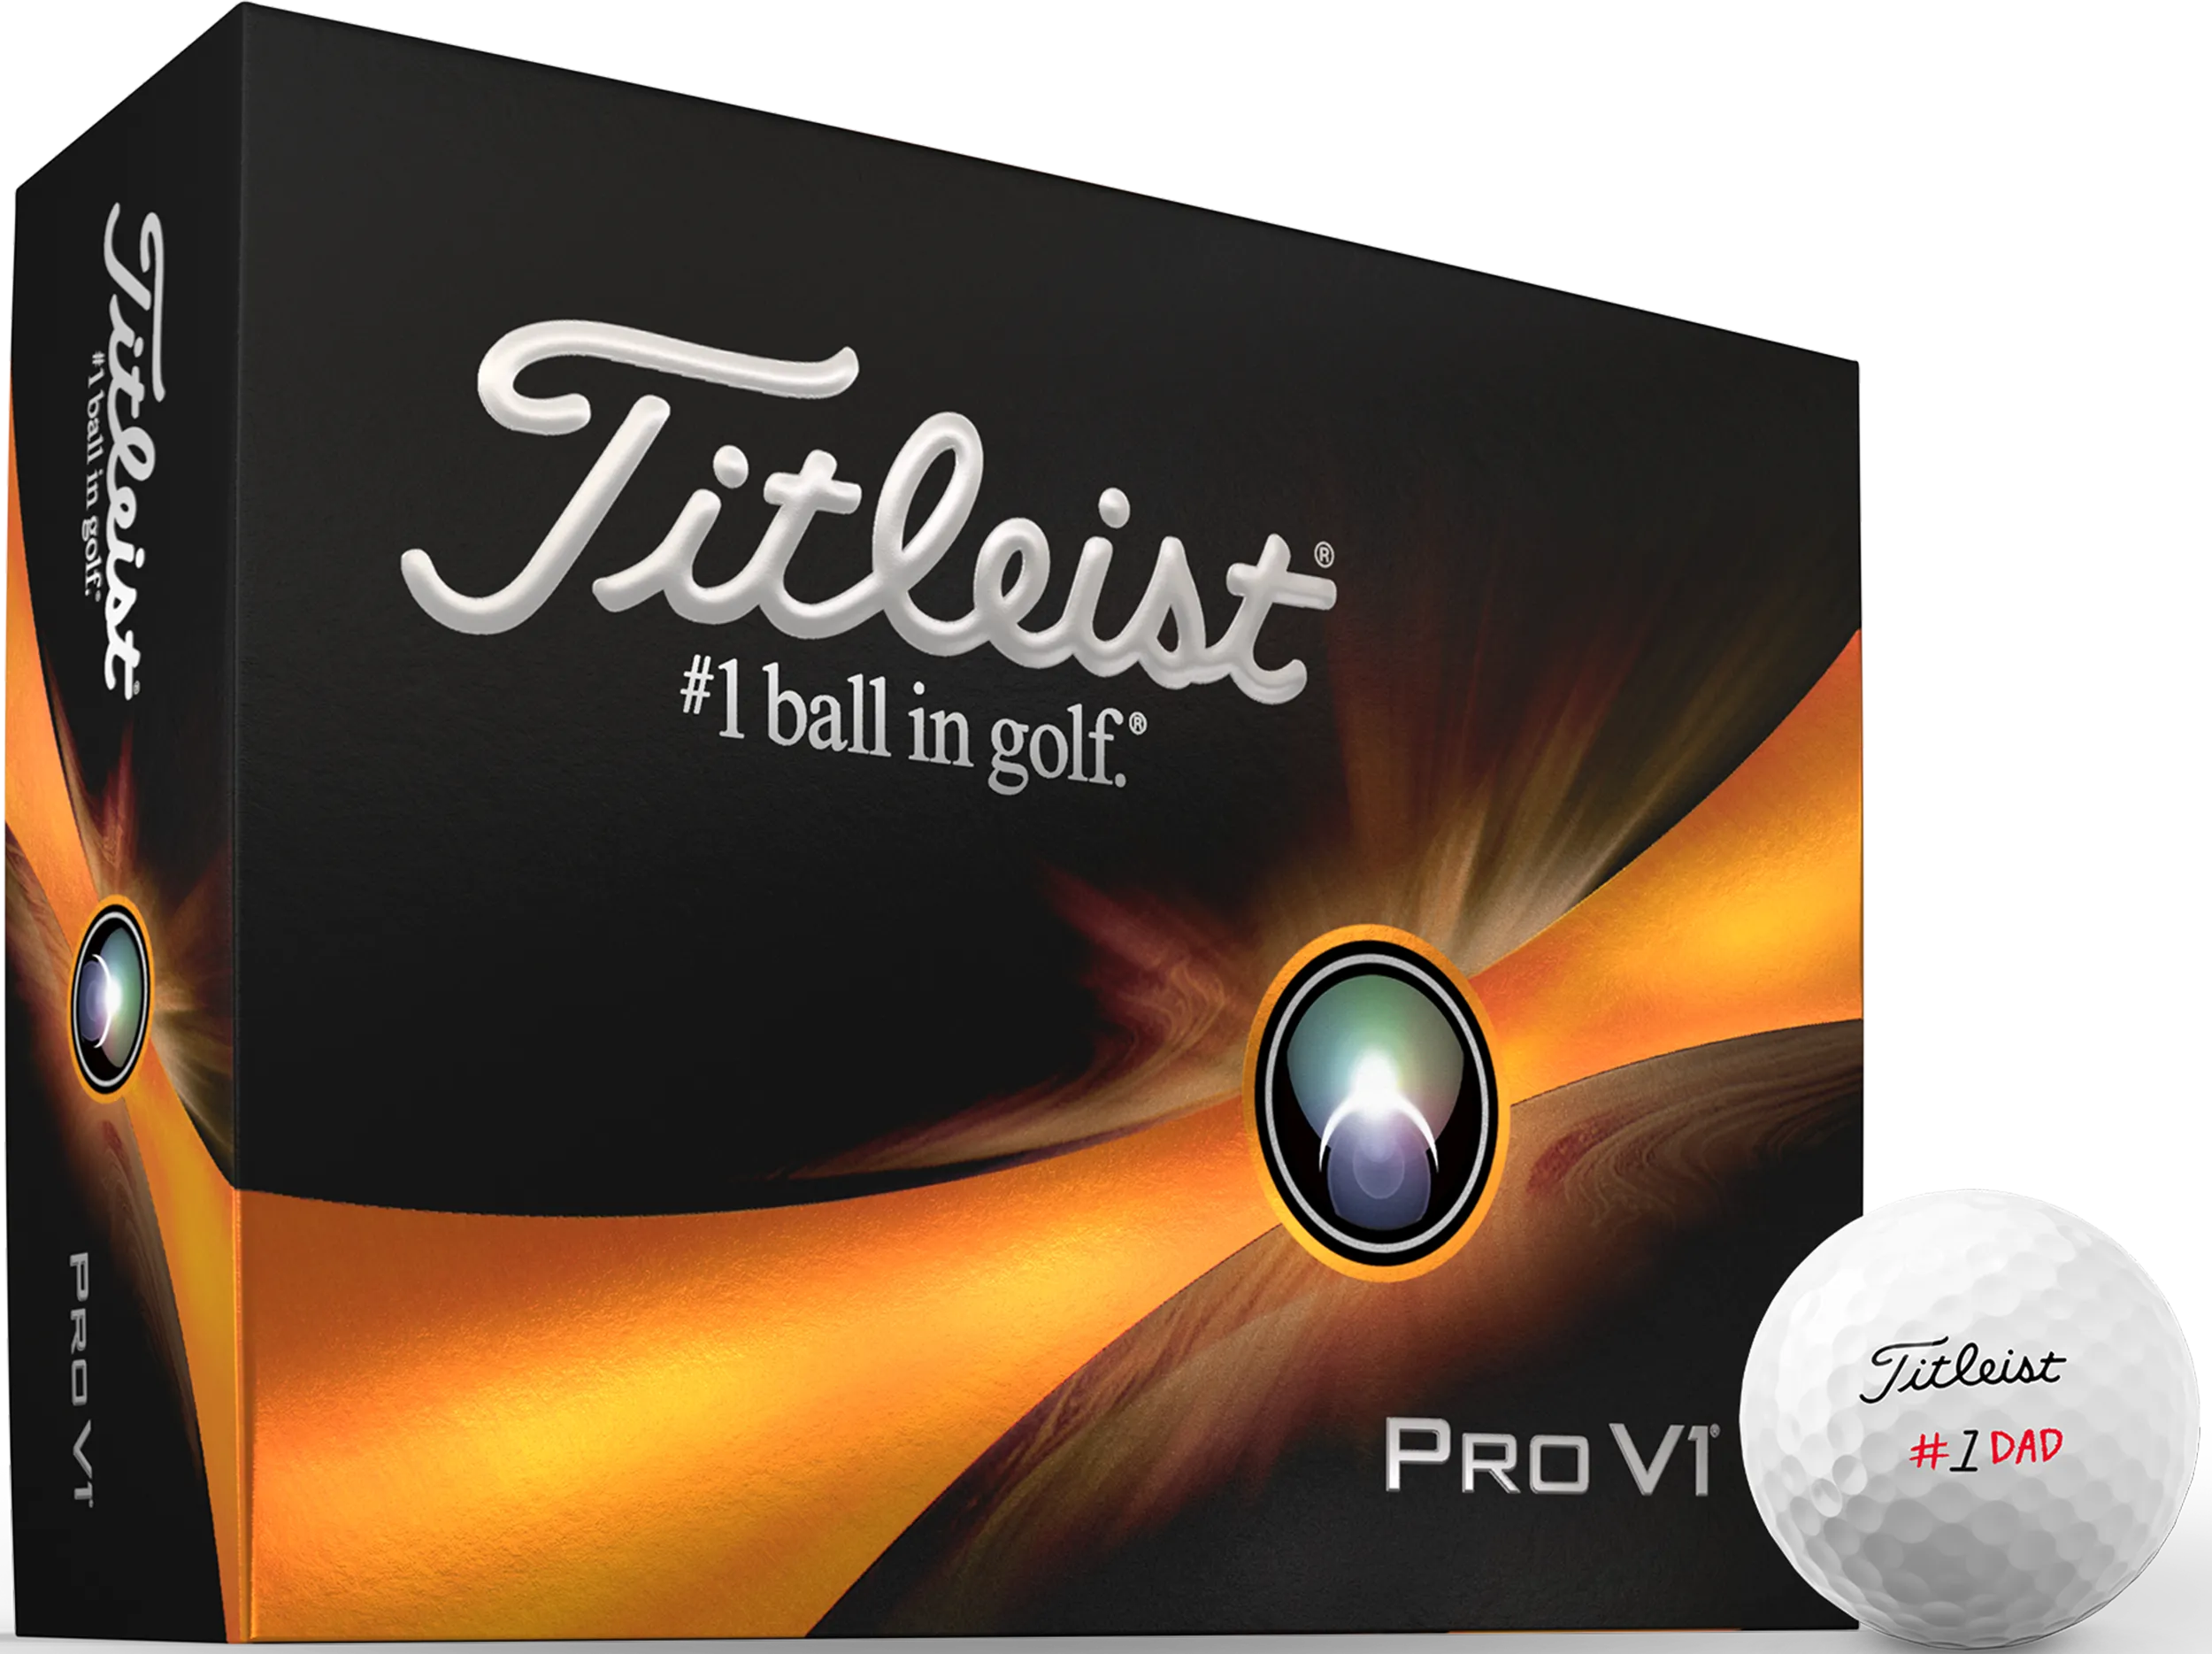 Titleist Pro V1 #1 Dad Limited Edition Golfbälle, weiß